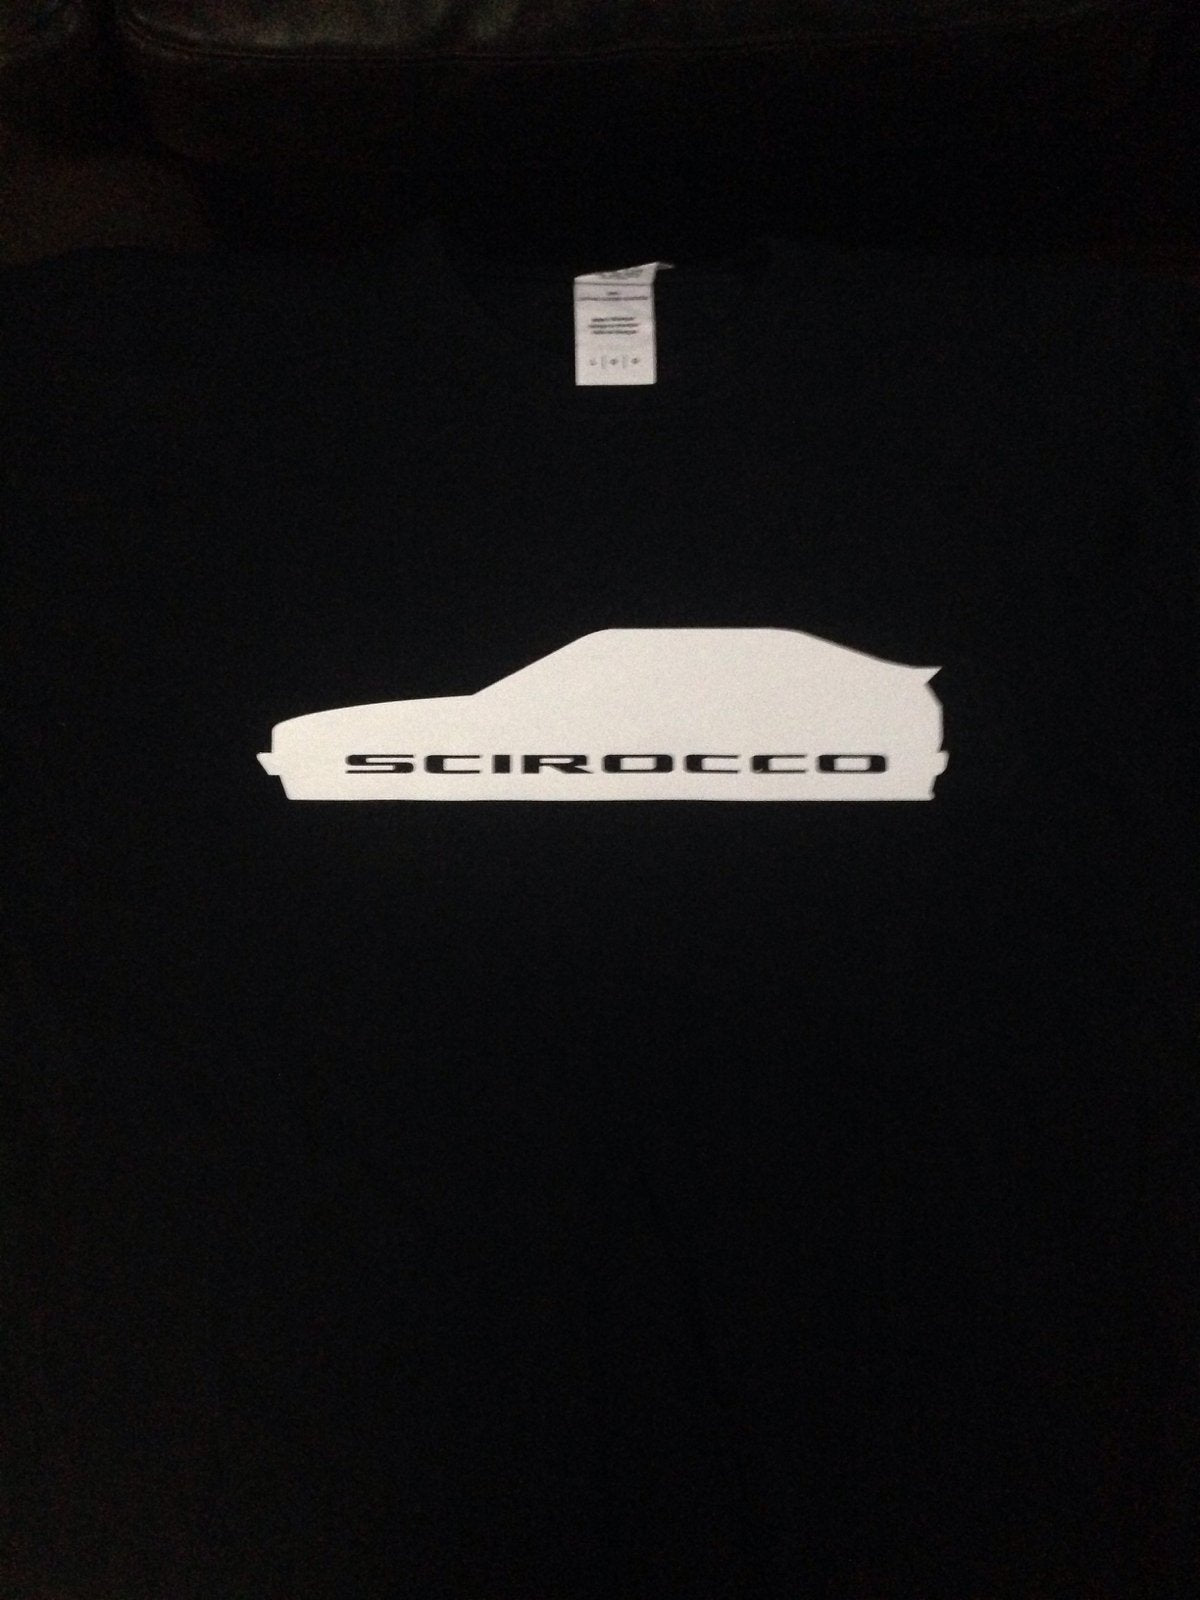 Scirocco T-shirt - Autobahn Autoworx